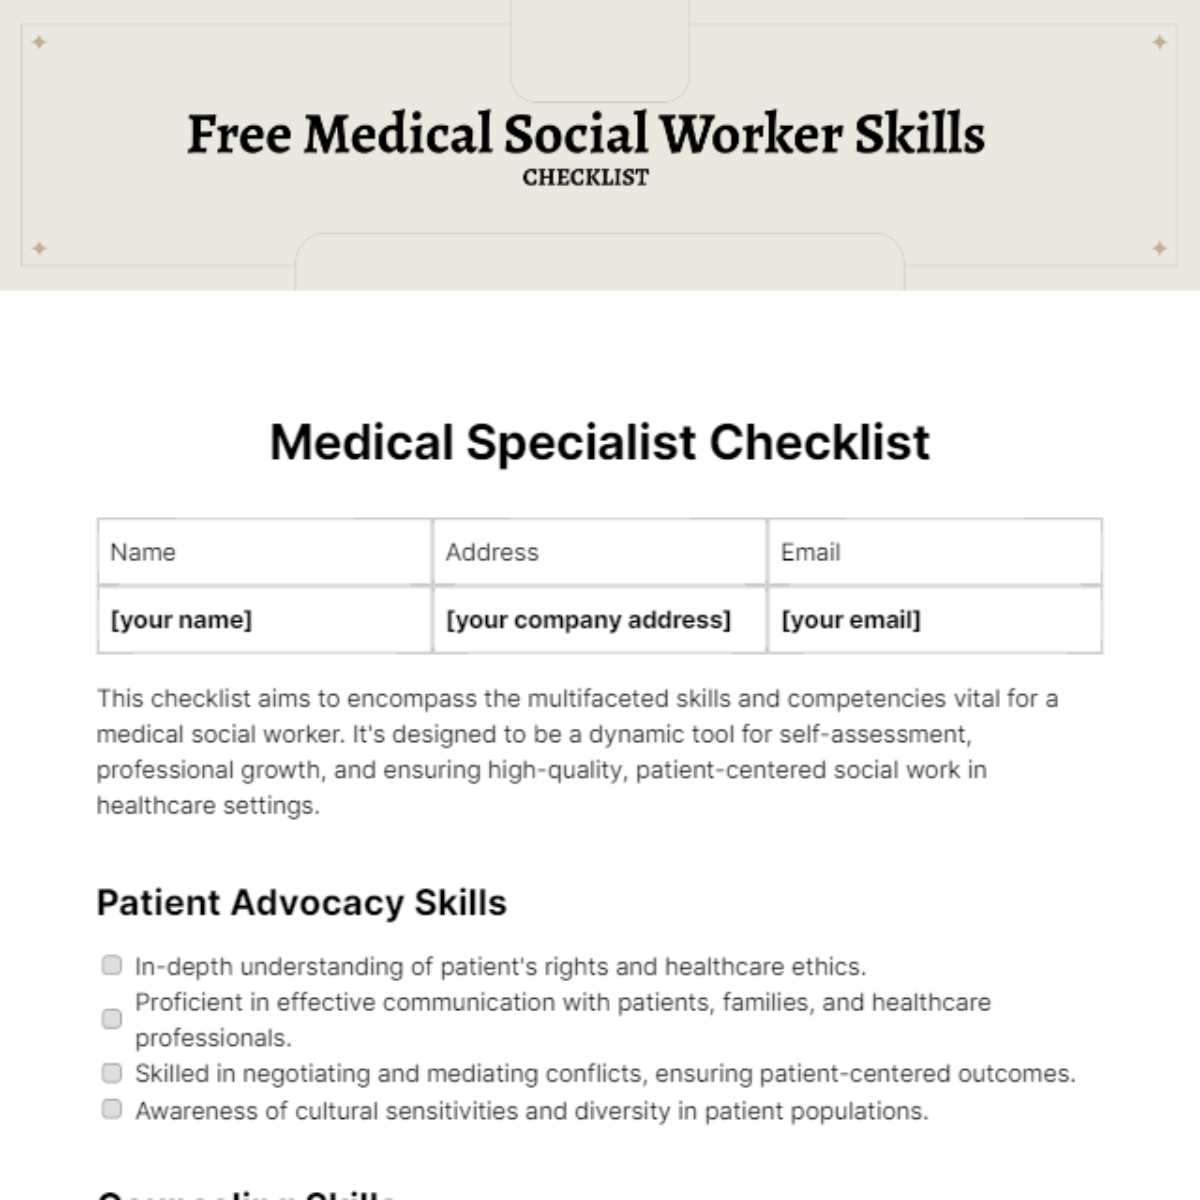 Free Medical Social Worker Skills Checklist Template